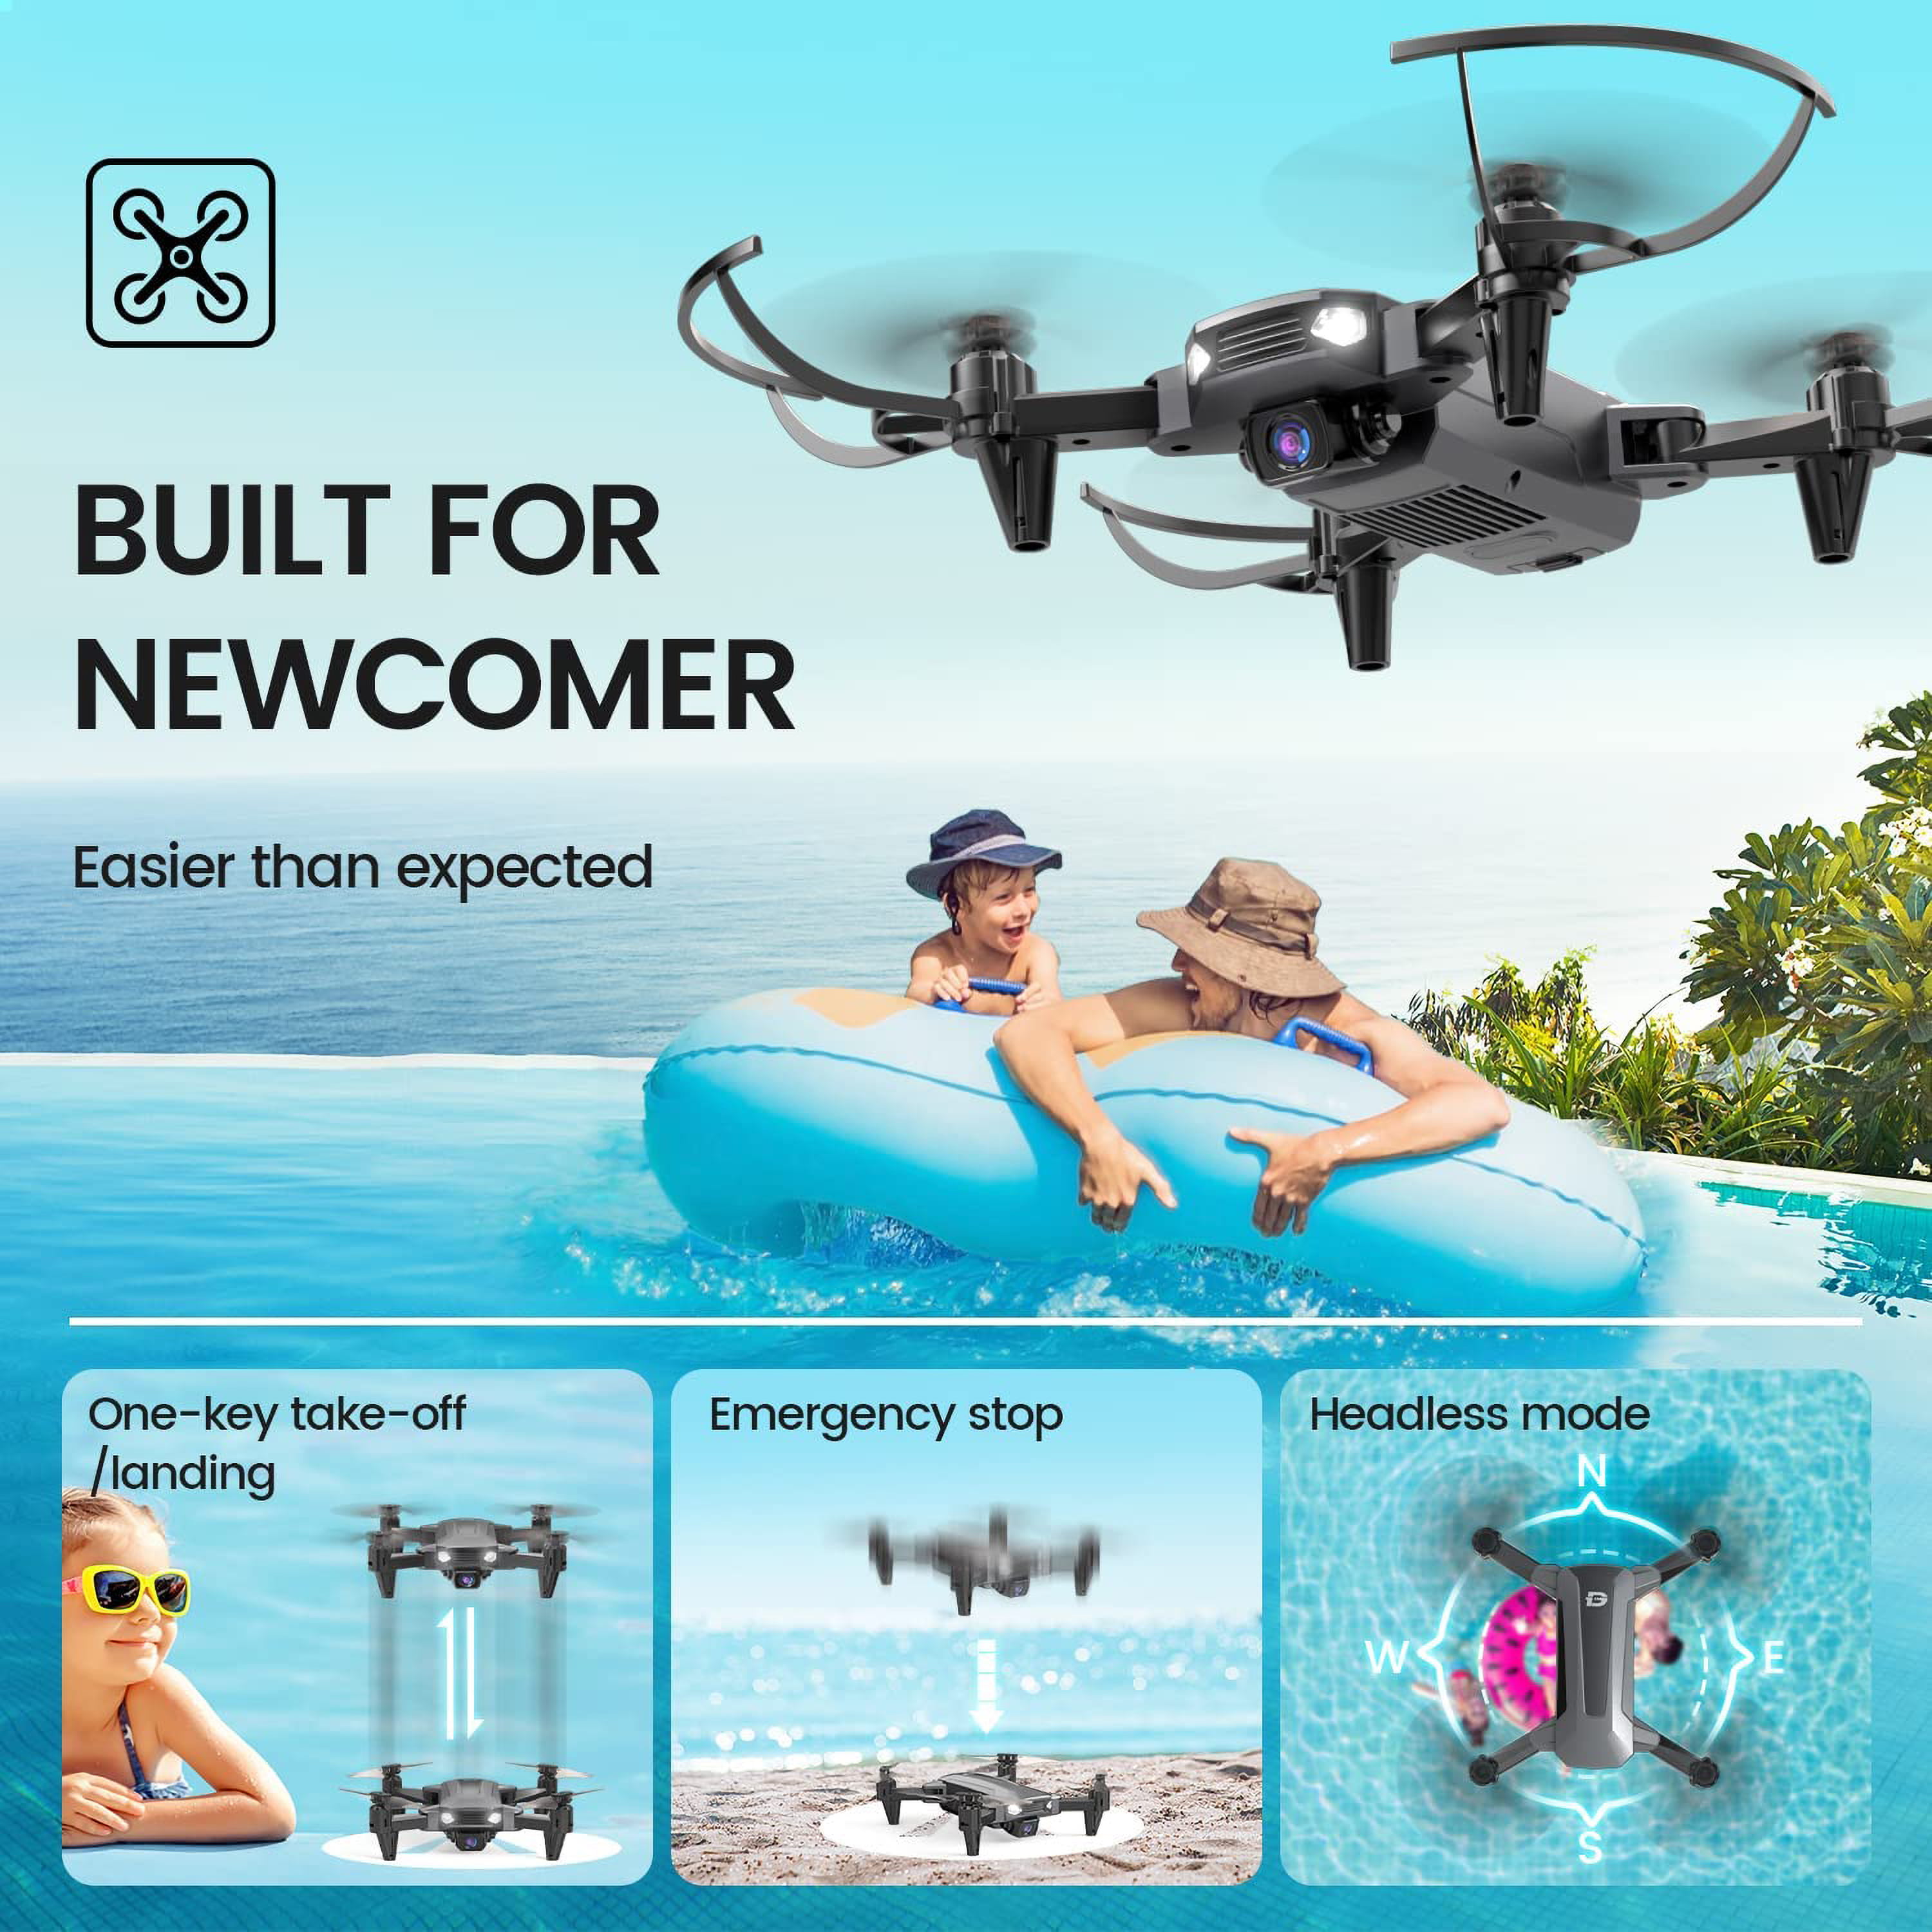 DEERC Dron D40 con cámara para niños, D40 FPV HD 1080P Mini avión para  adultos principiantes, avión RC plegable Quad Hobby, regalos de juguetes, 2